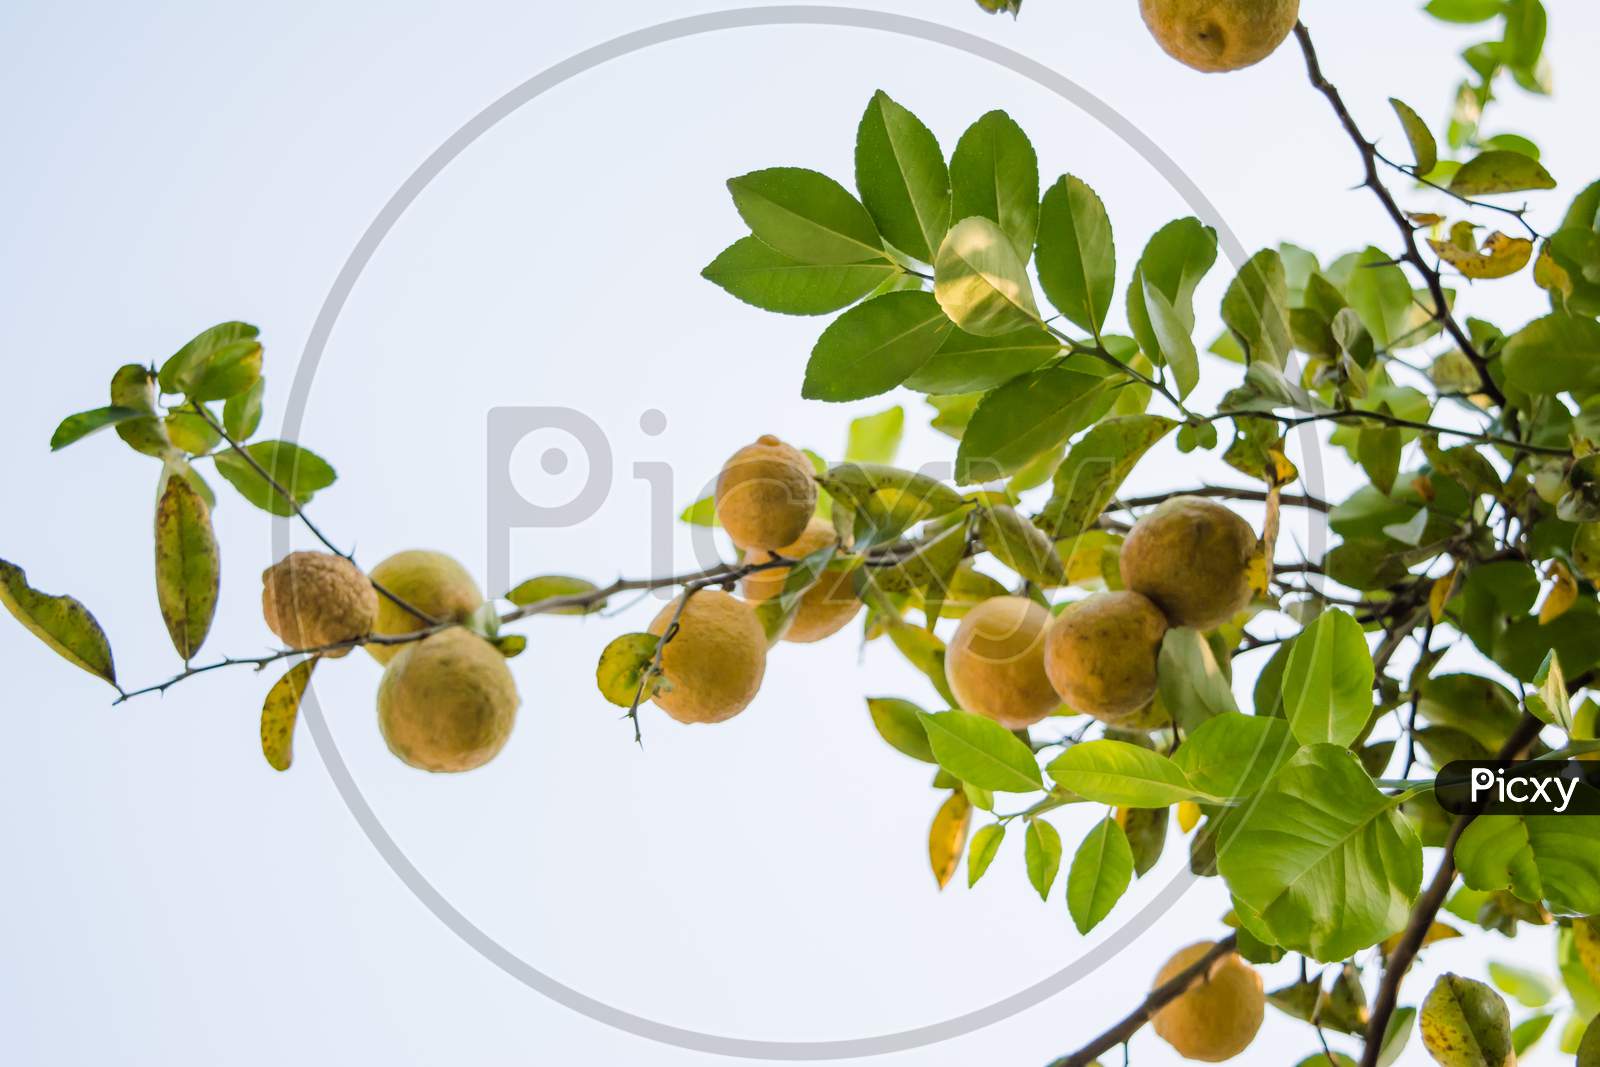 Bunches of fresh yellow ripe lemons hanging on a lemon tree in Assam